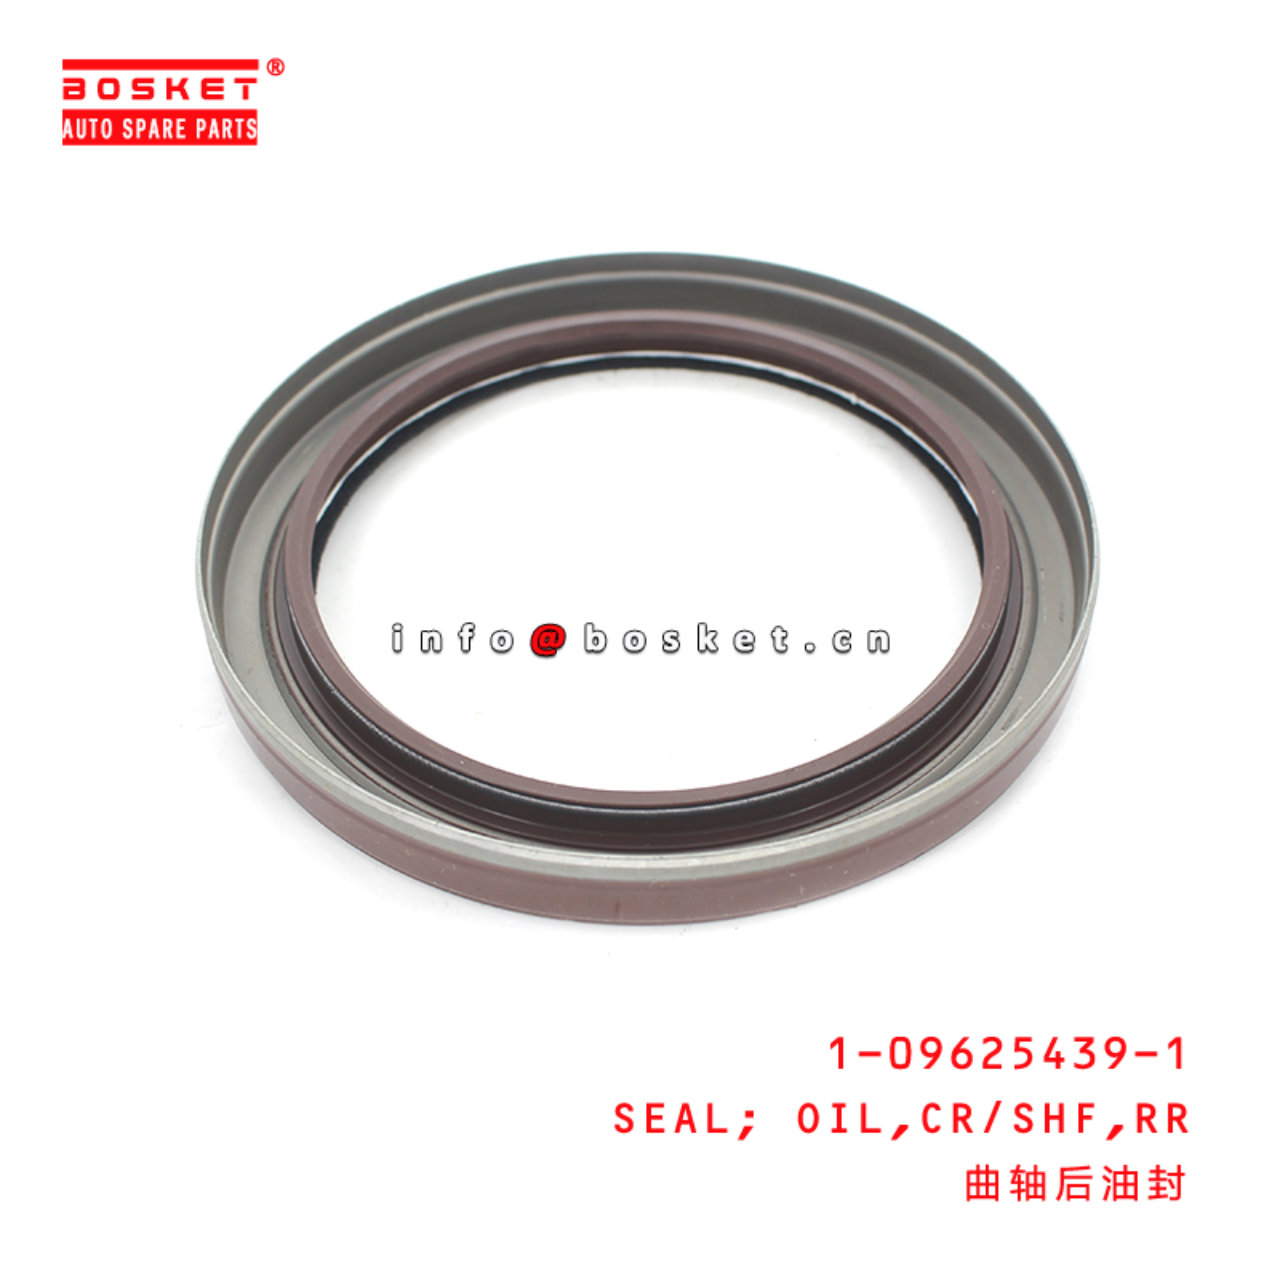 1-09625439-1 Rear Crankshaft Oil Seal Suitable for ISUZU FRR 1096254391